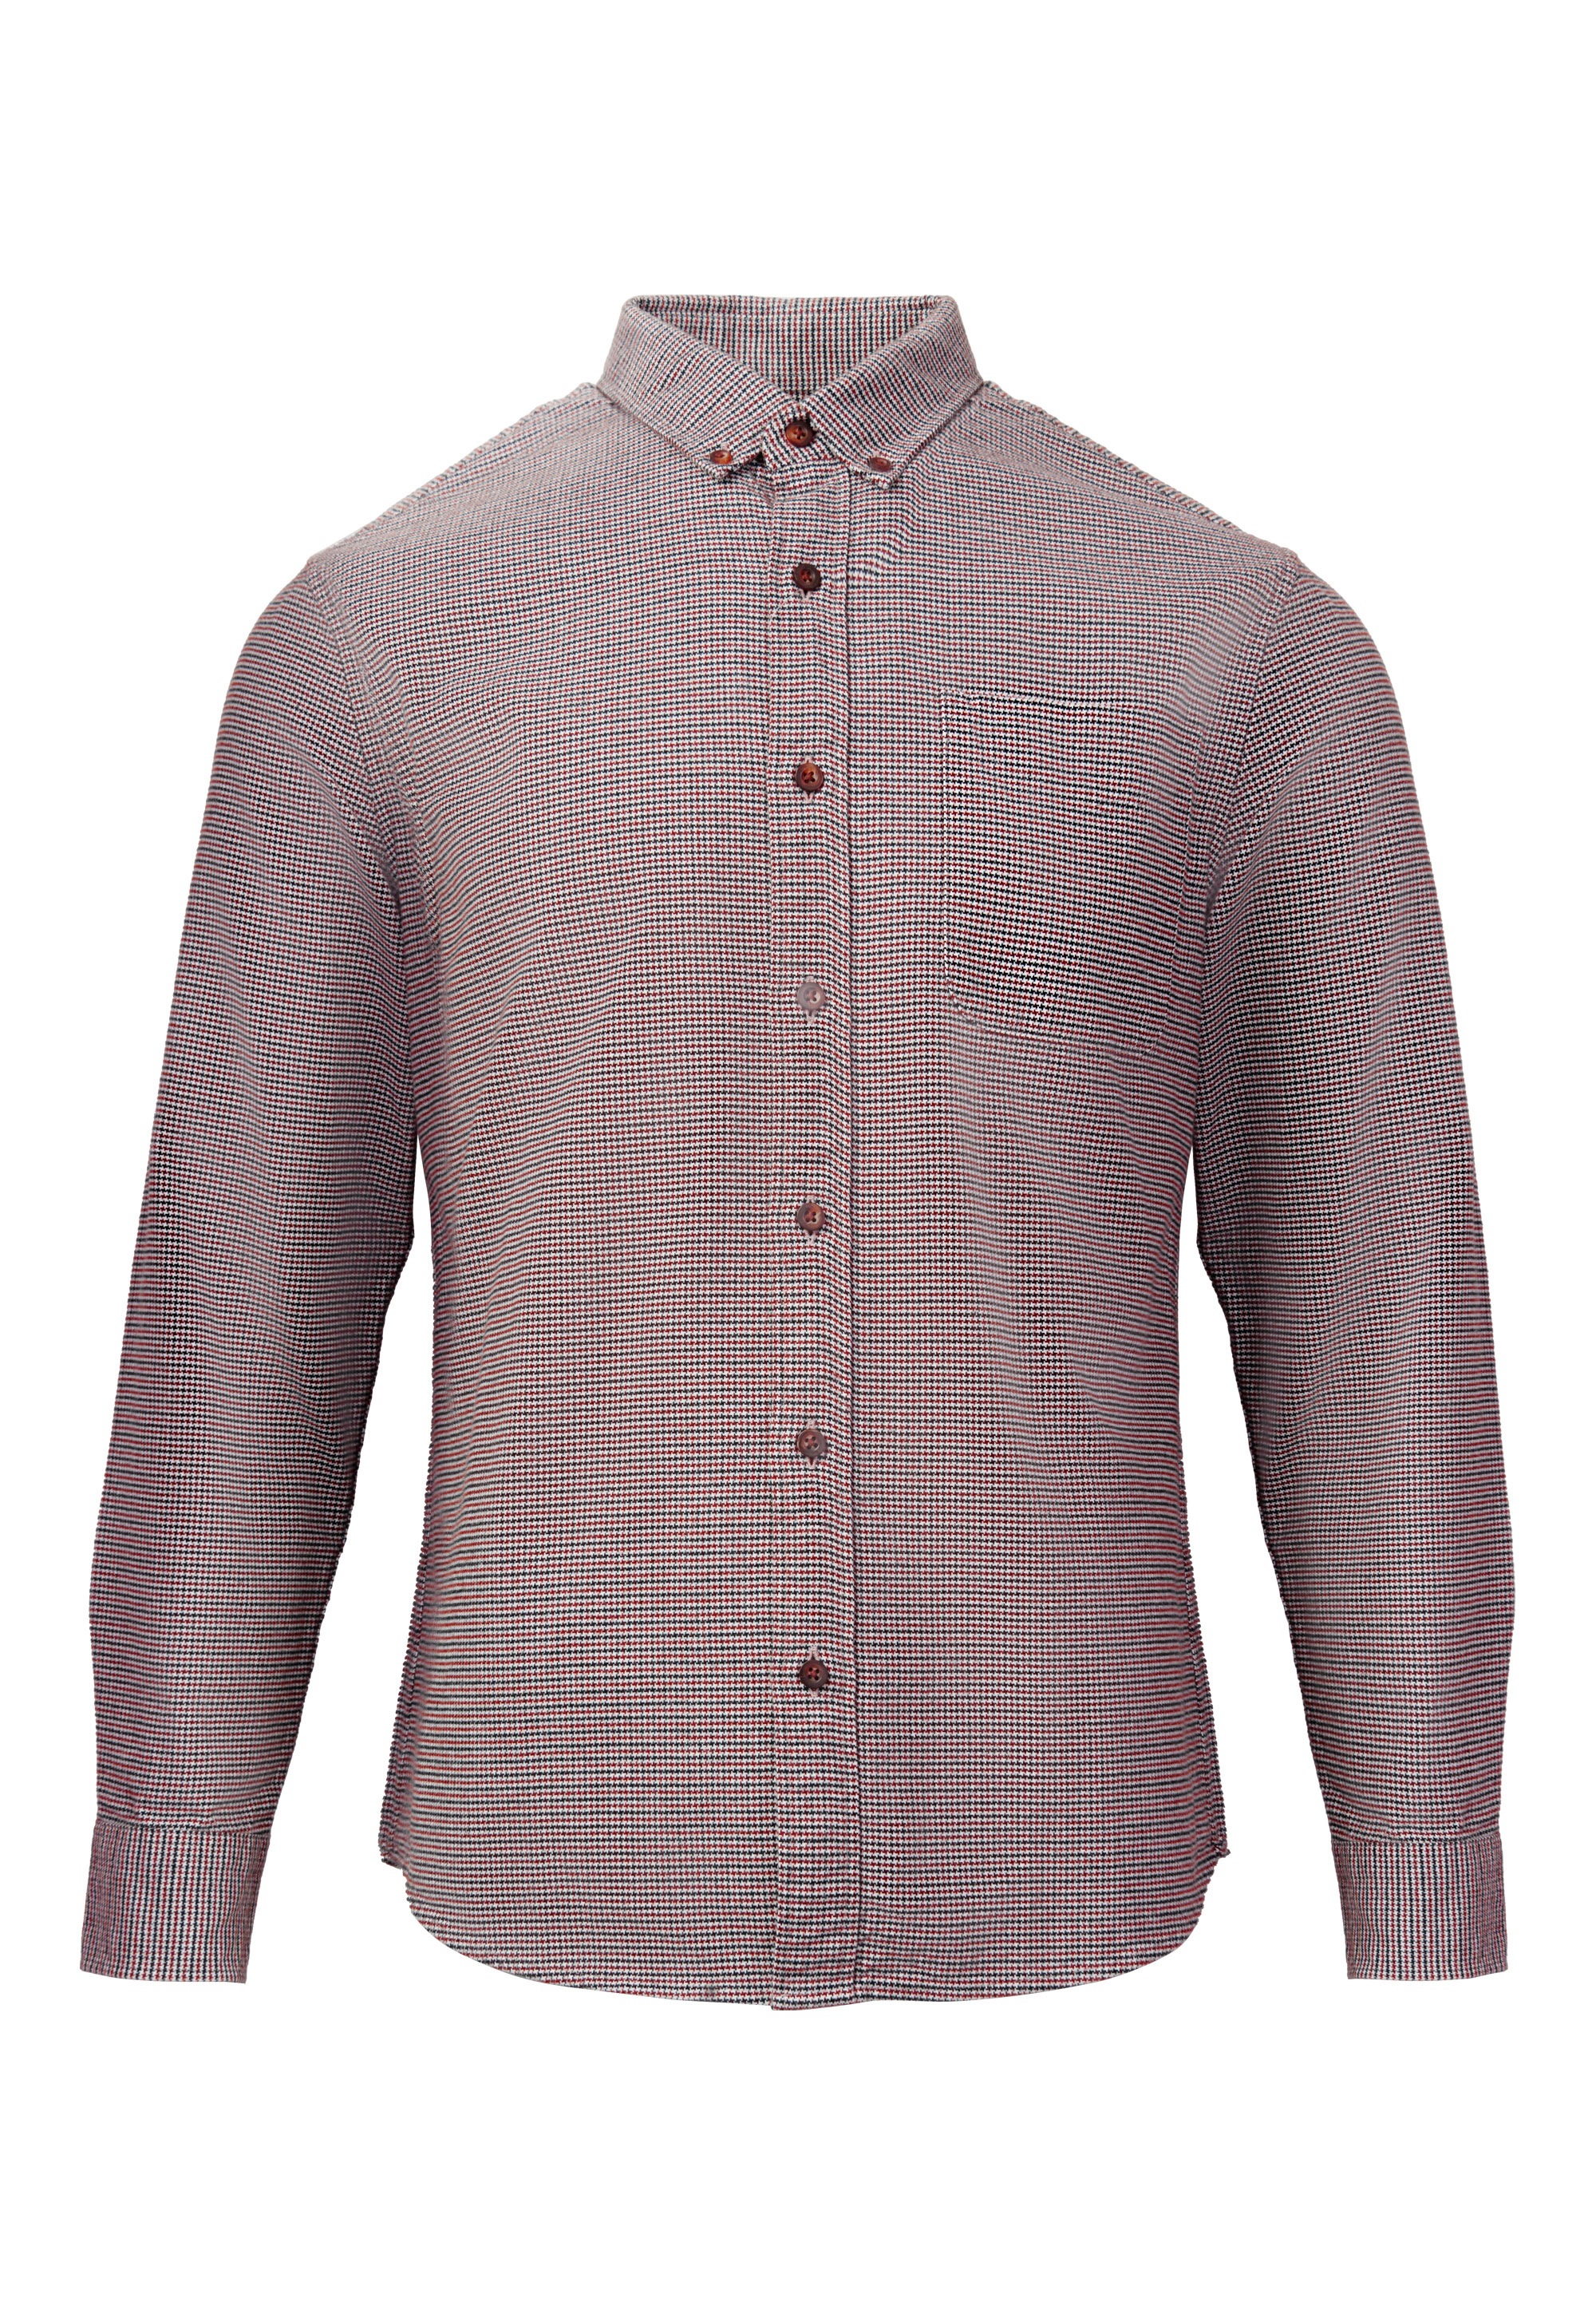 GIORDANO Langarmhemd, mit dezentem Karo-Muster | BAUR ▷ kaufen